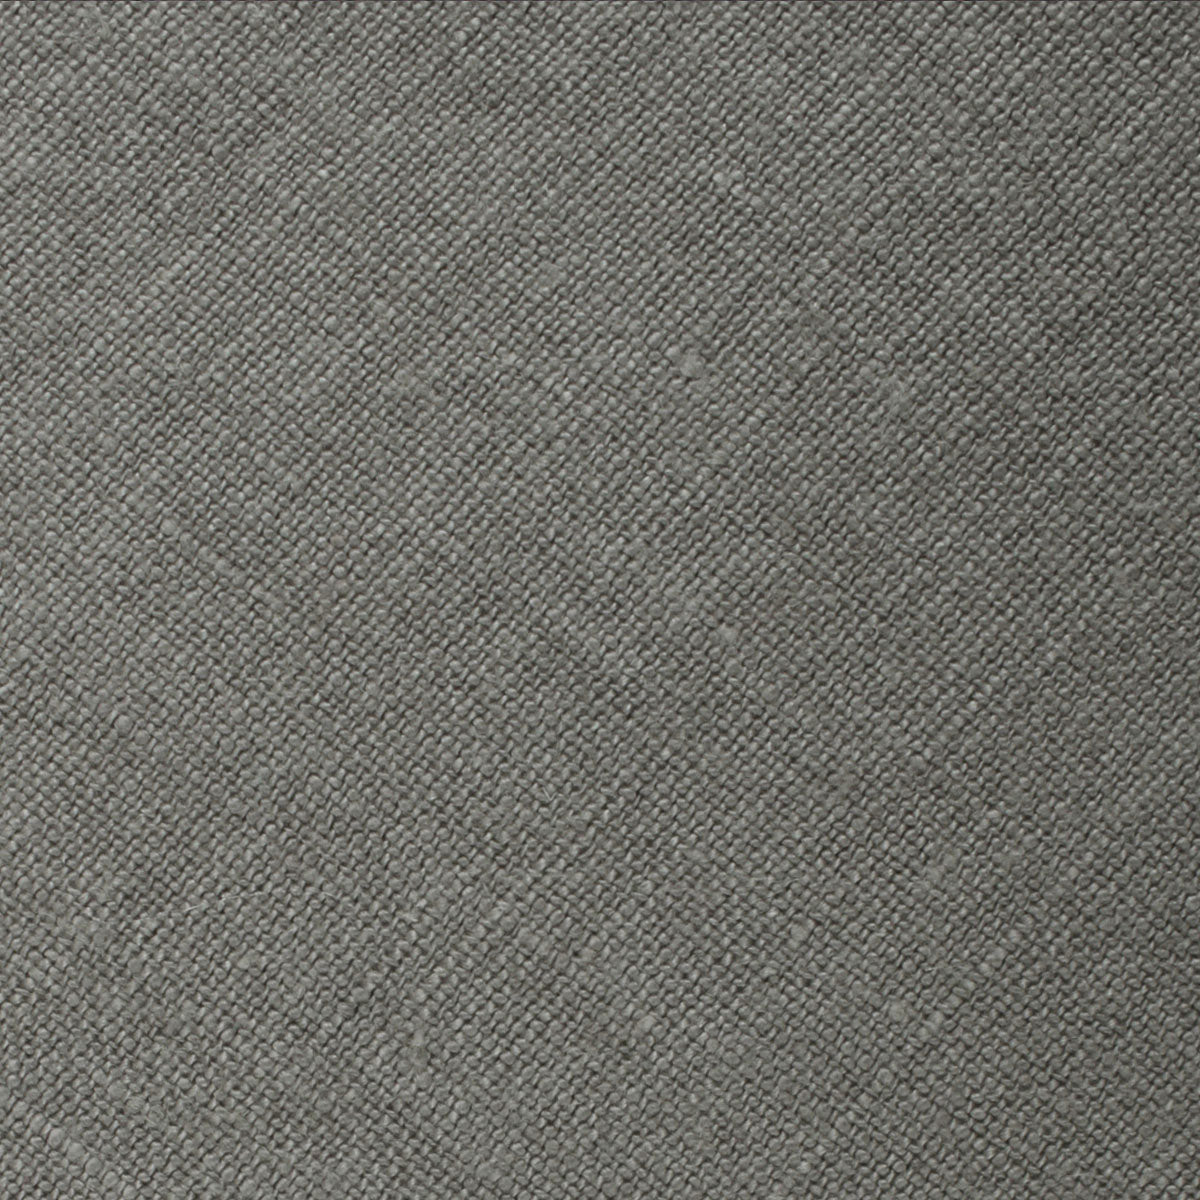 Mercury Charcoal Linen Skinny Tie Fabric